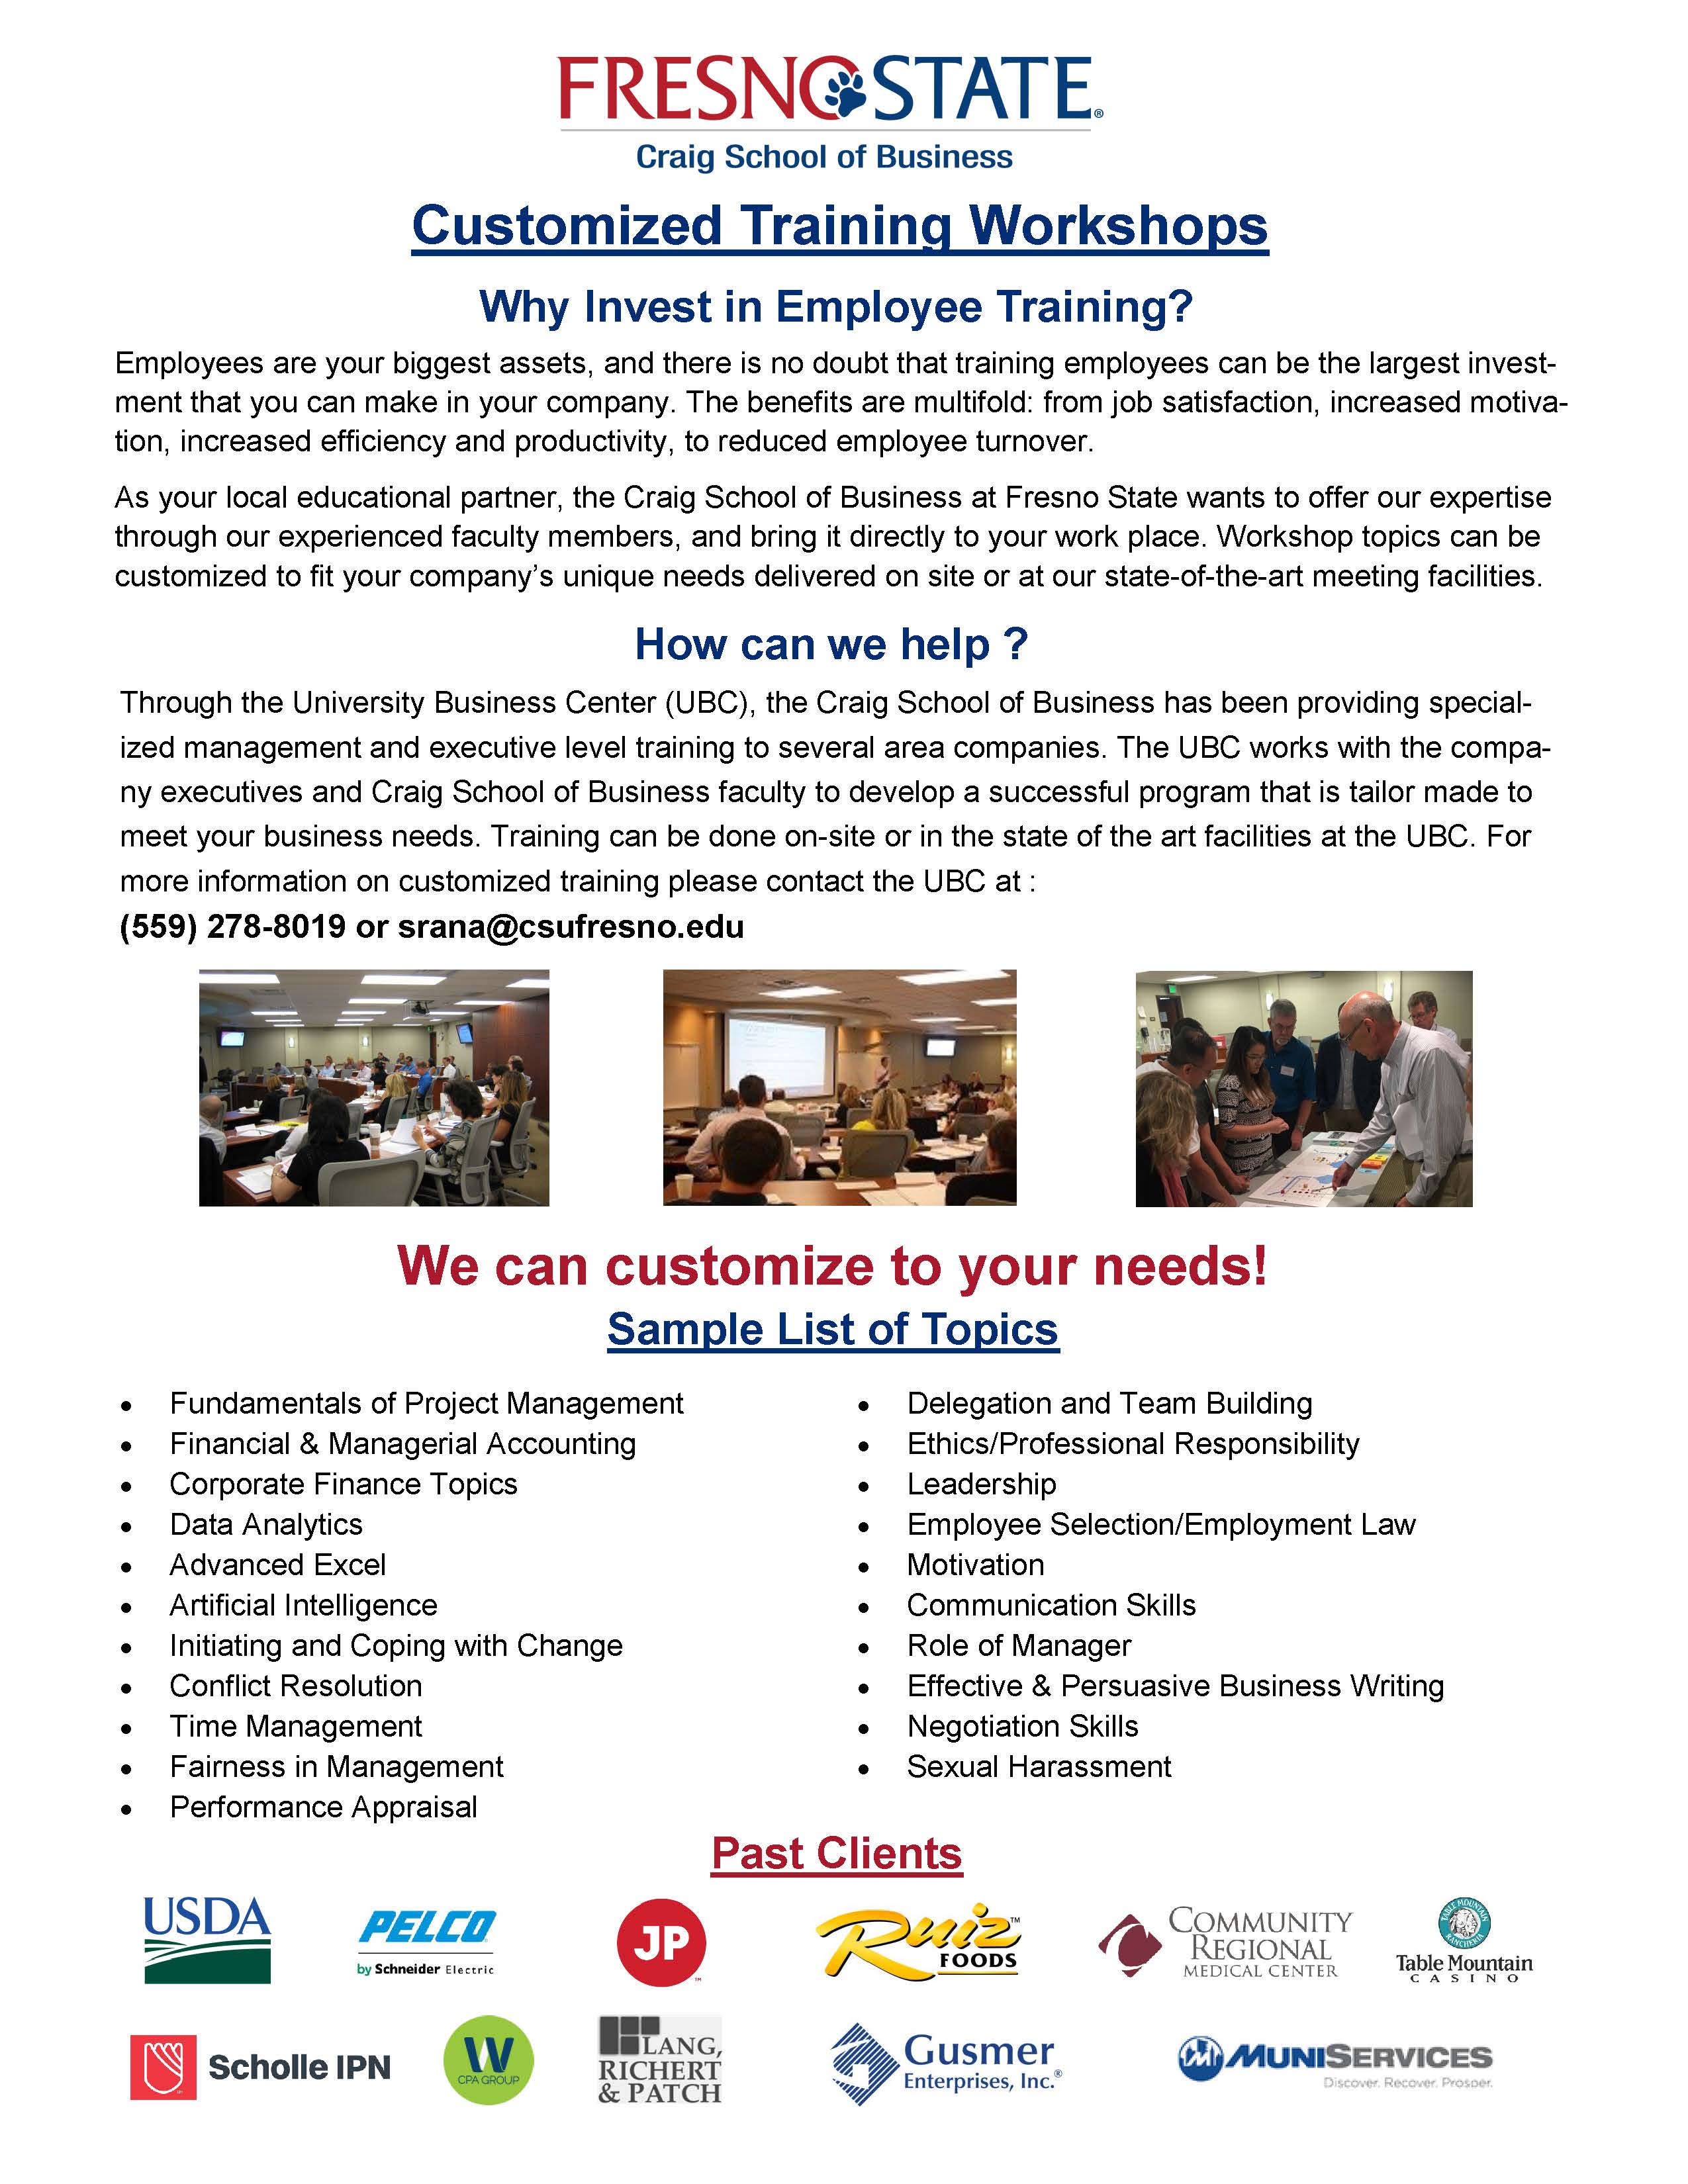 UBC Customized Corporate Training